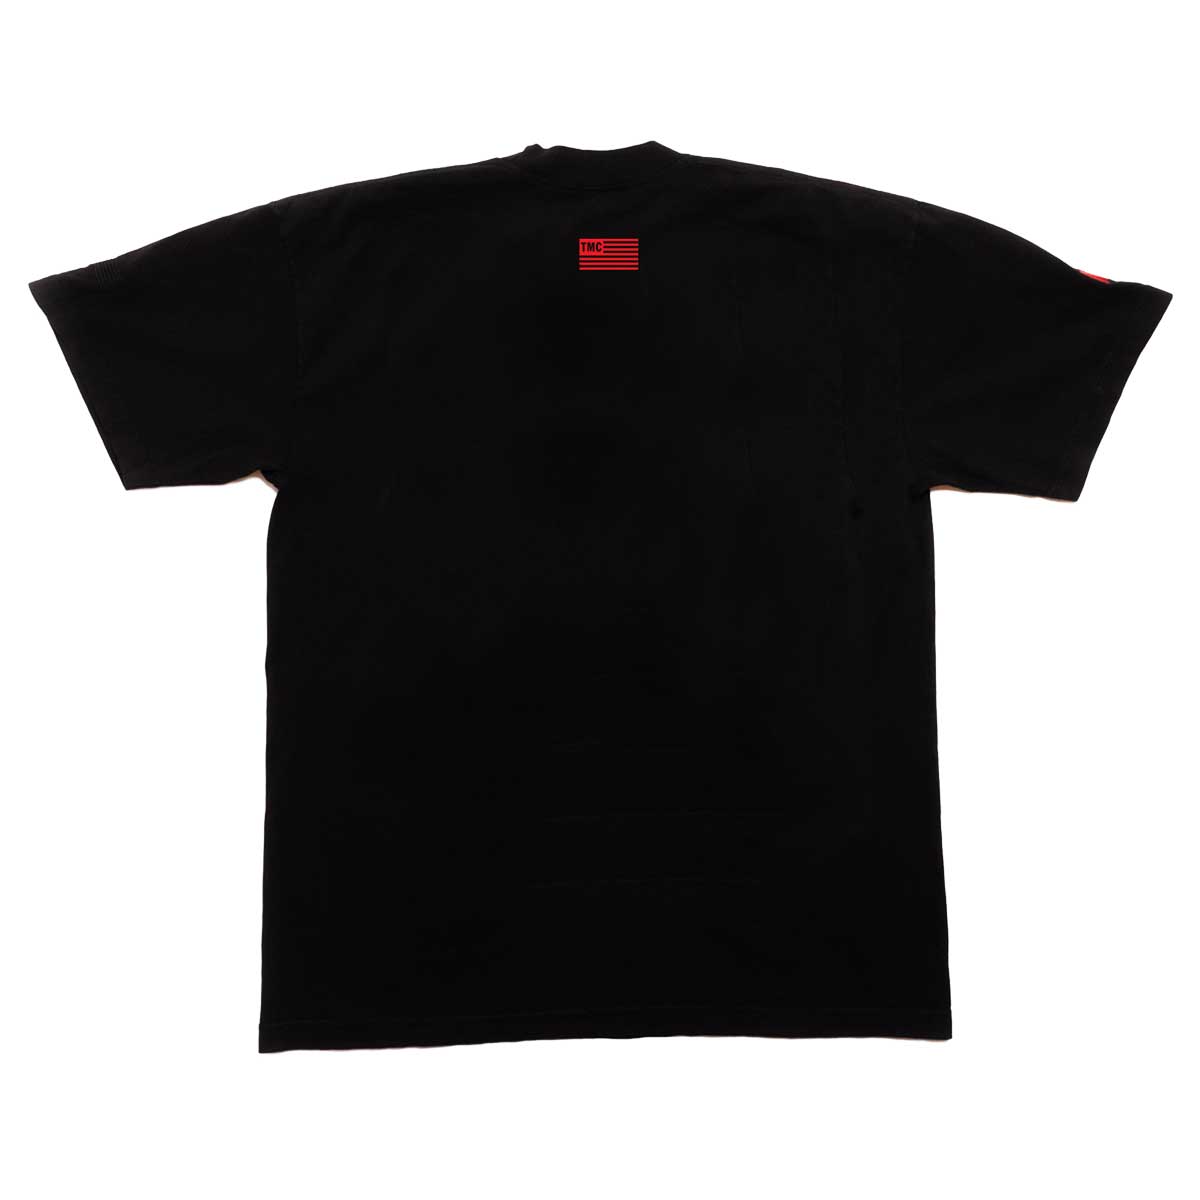 Artifact Quote T-shirt - Black